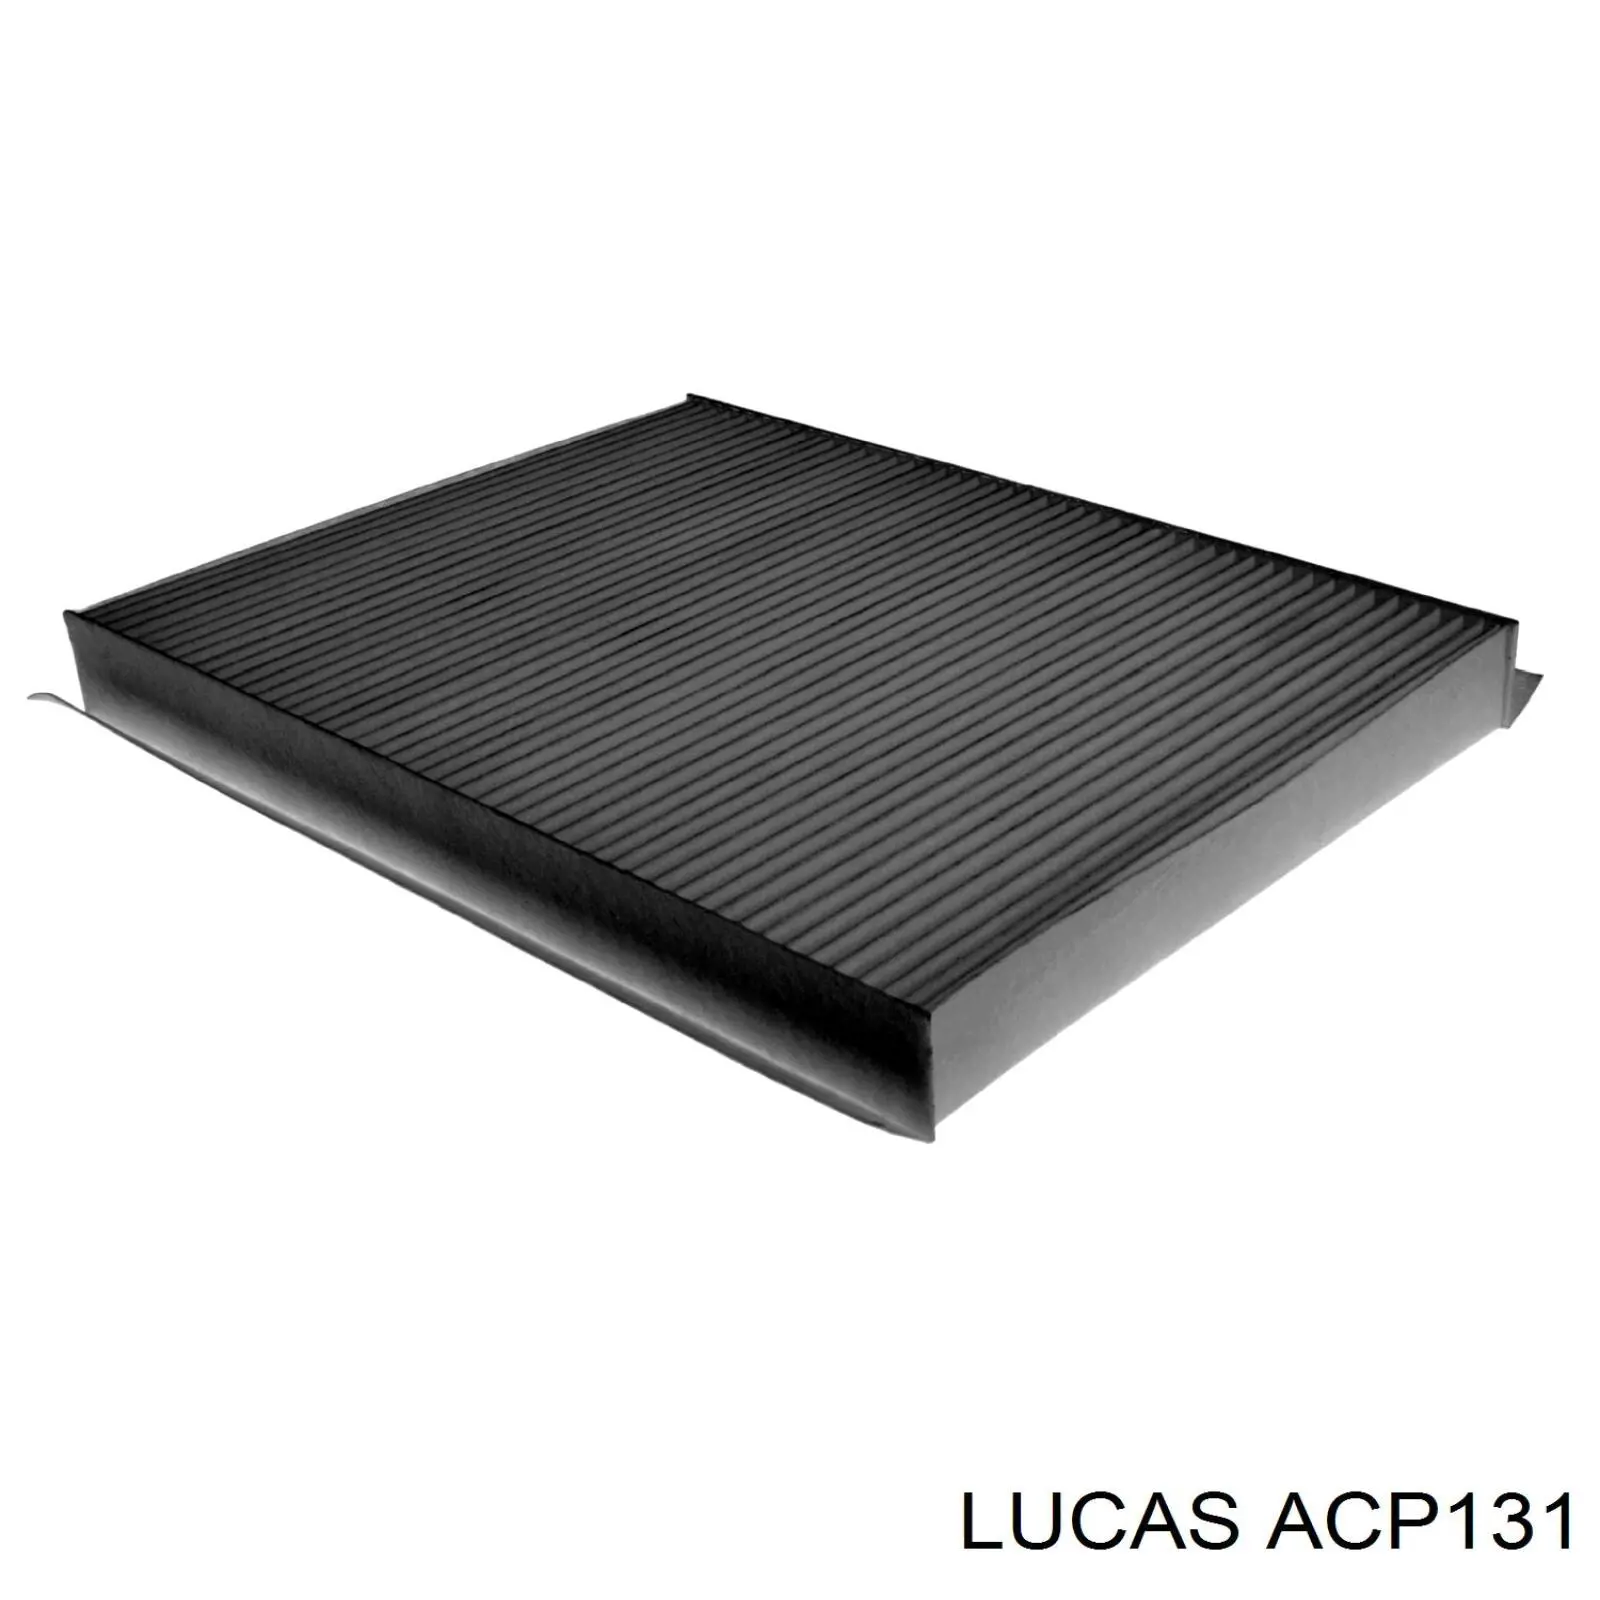 Compresor de aire acondicionado ACP131 Lucas